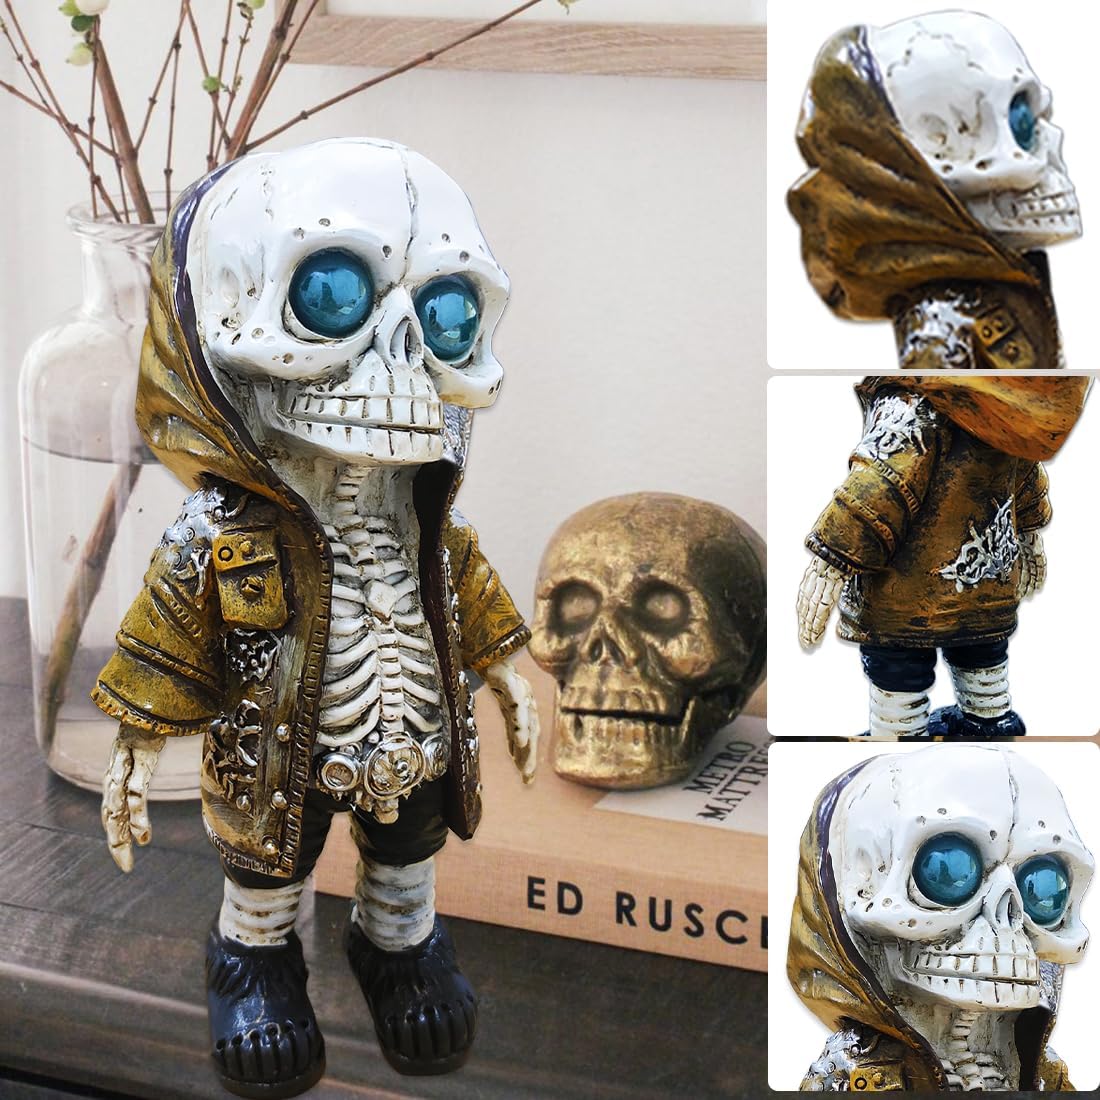 YXOTJHS Skull Decor,Halloween Skeleton Figurines,Horror Movie Garden Gnomes,Halloween Decor Skeleton Statue Indoor Decorations,Cool Skeleton Action Figure Gift for Kids Adult